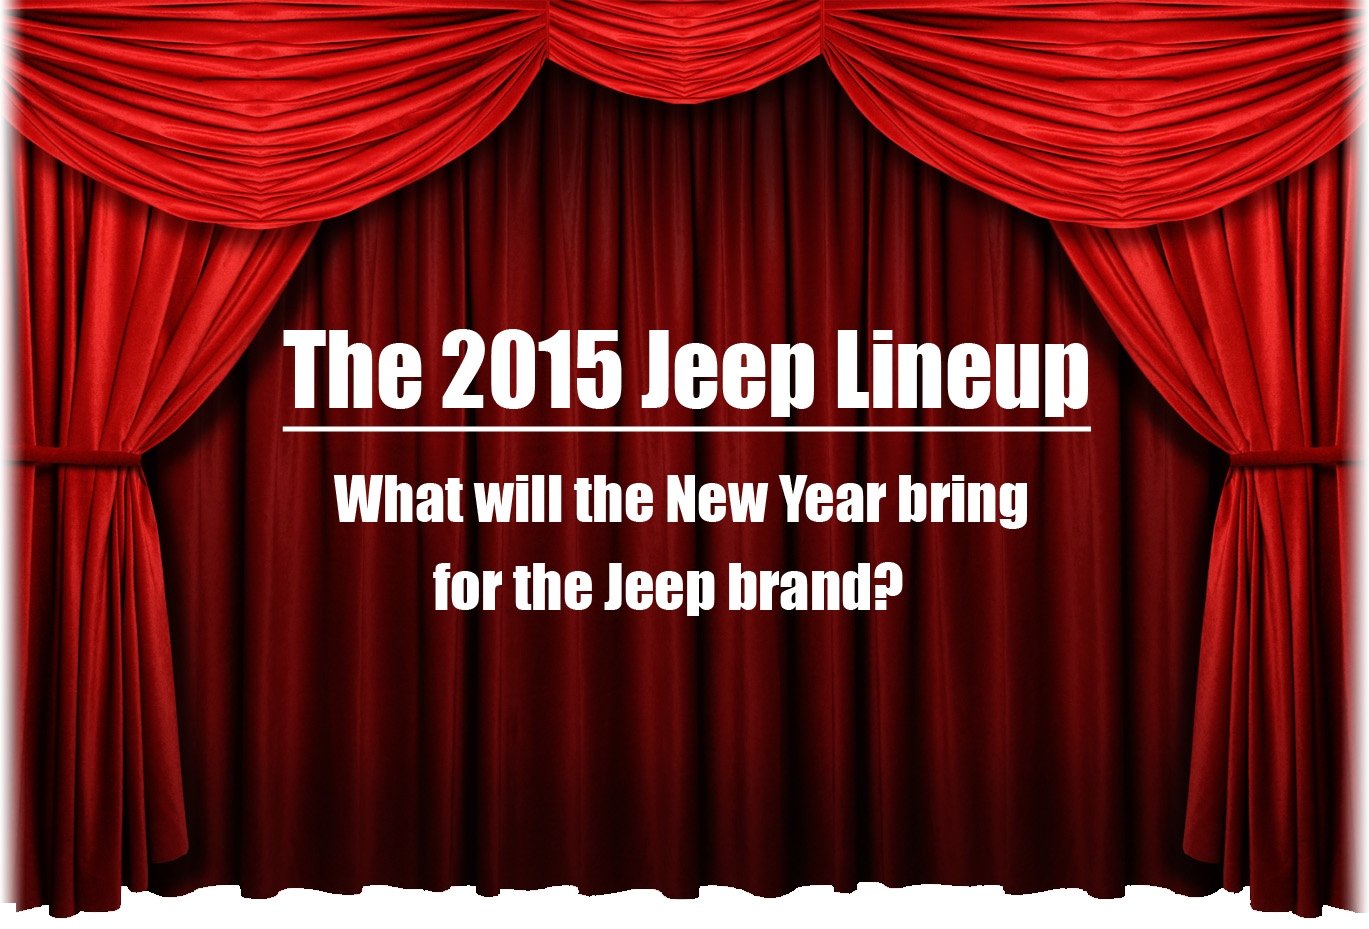 2015 Jeep Lineup